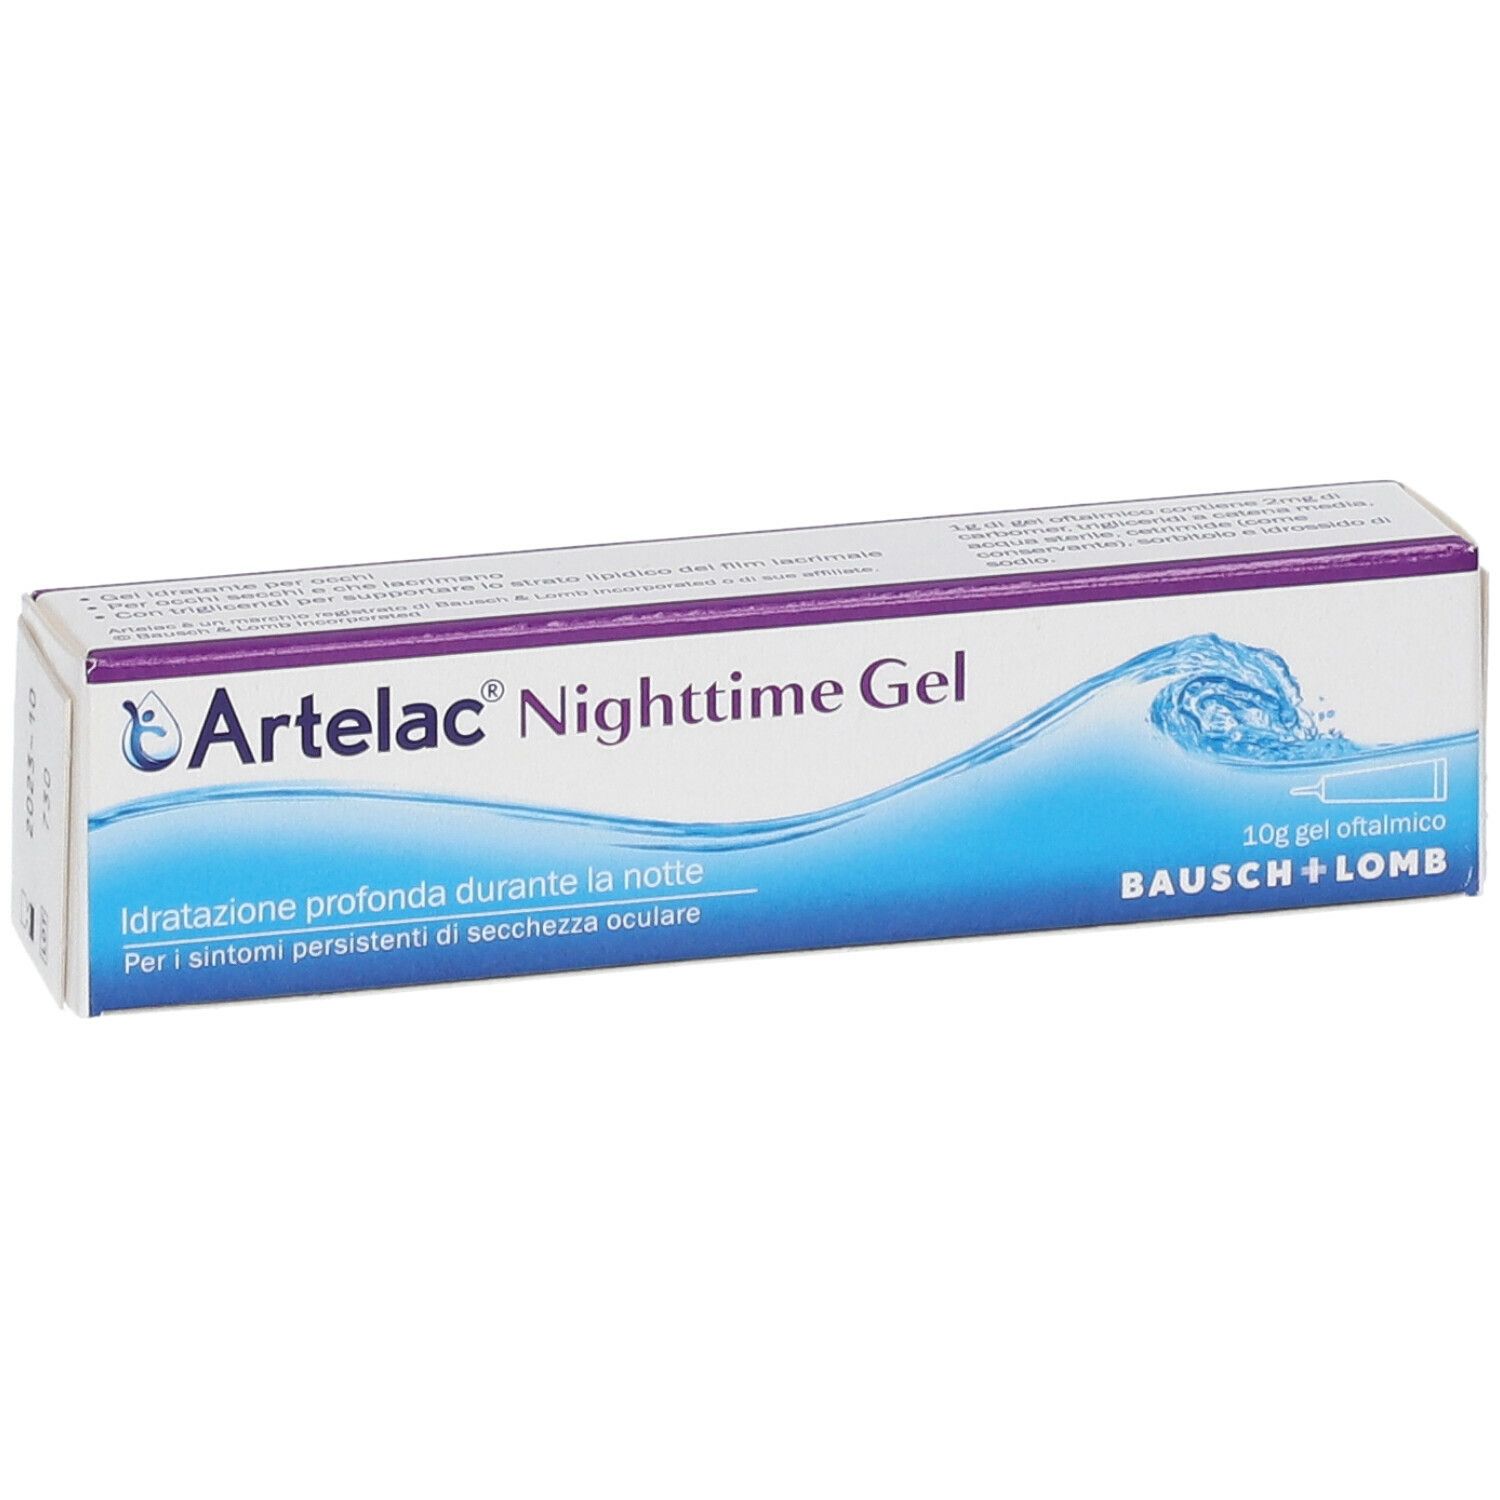 Artelac® Nighttime Gel